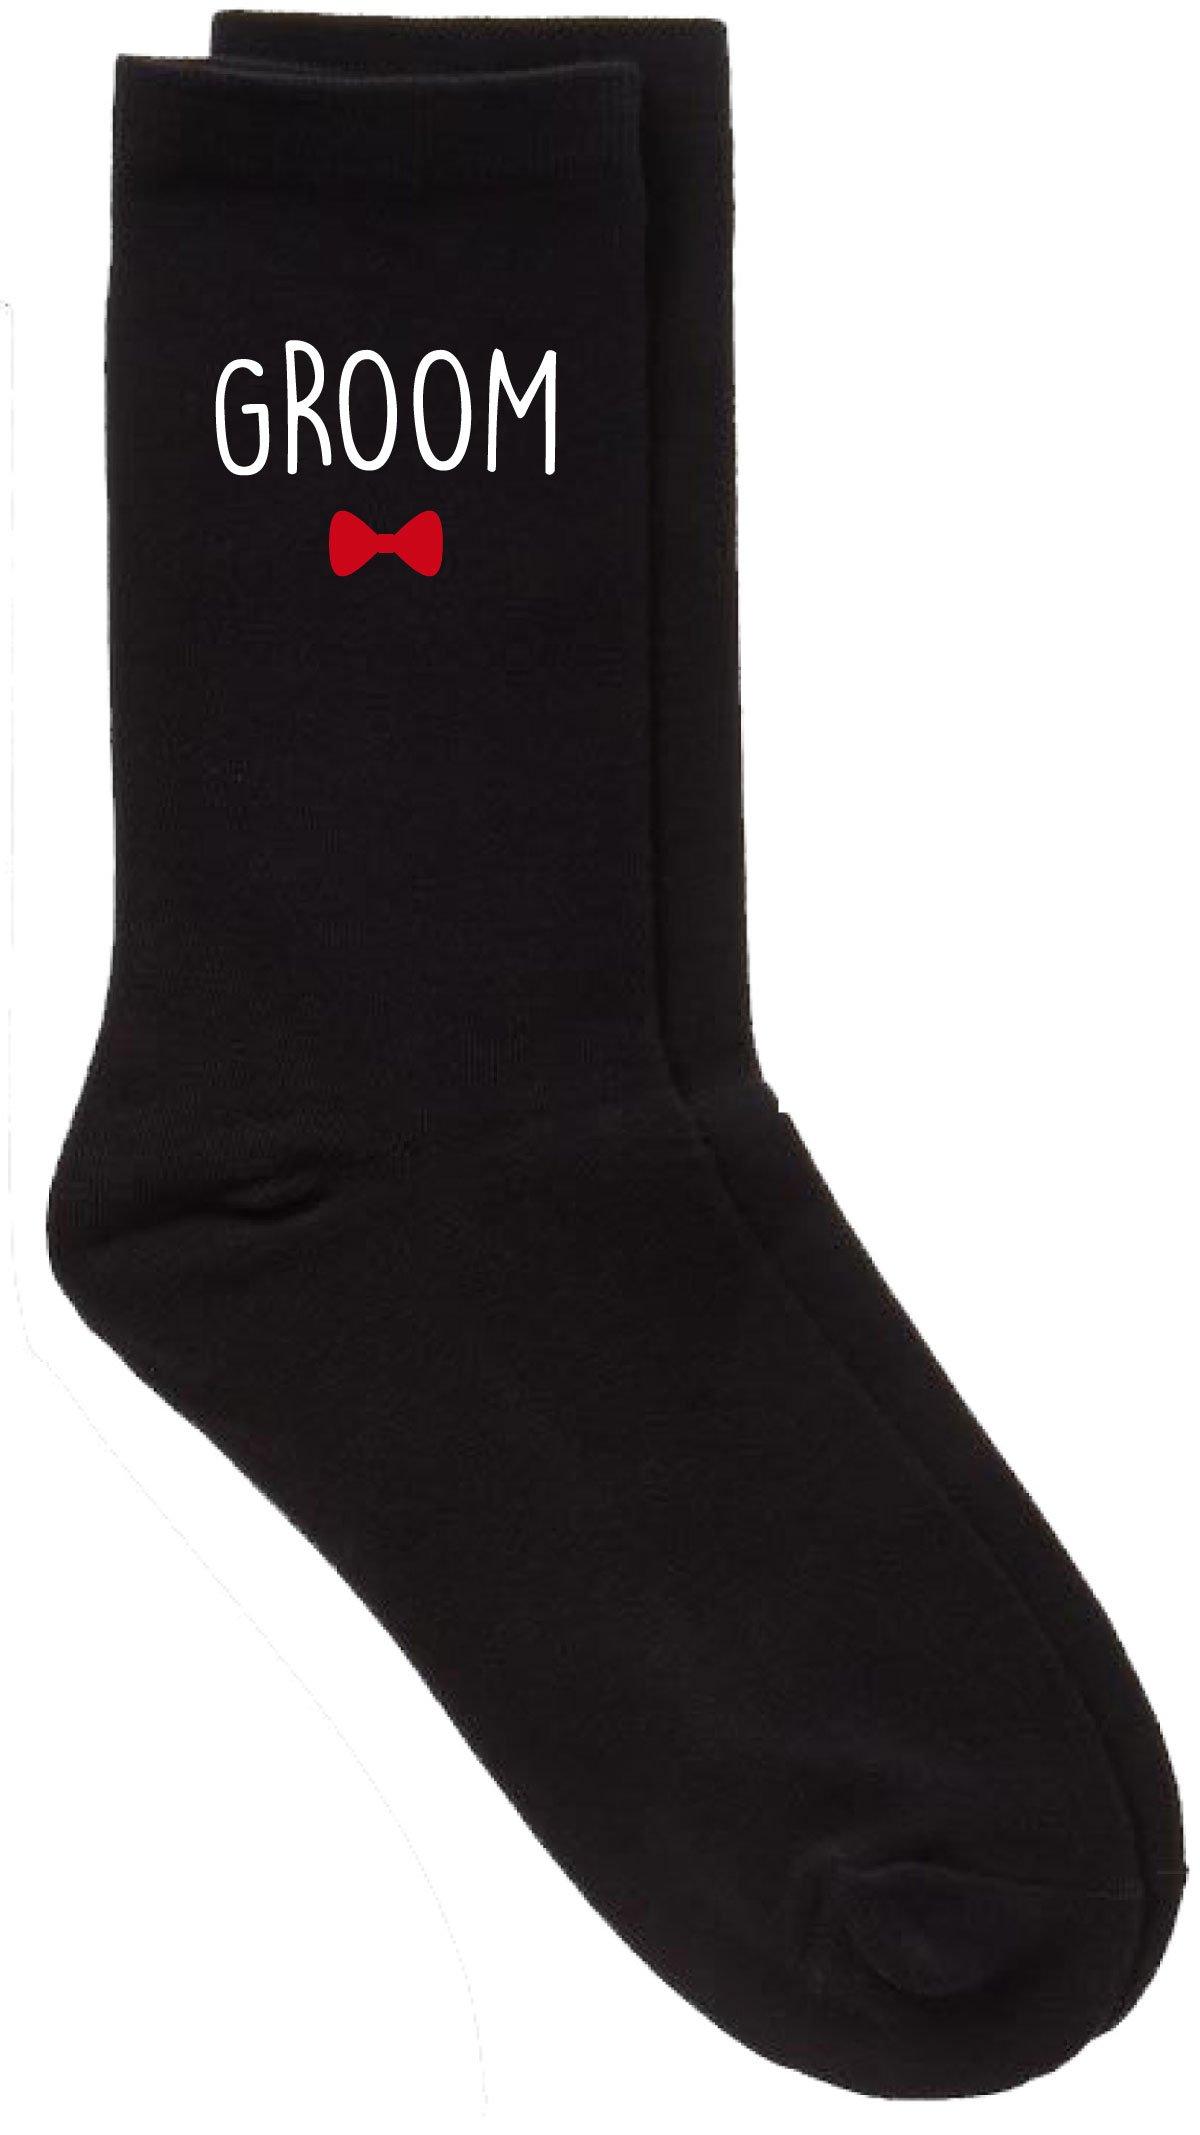 Groom Black Calf Socks